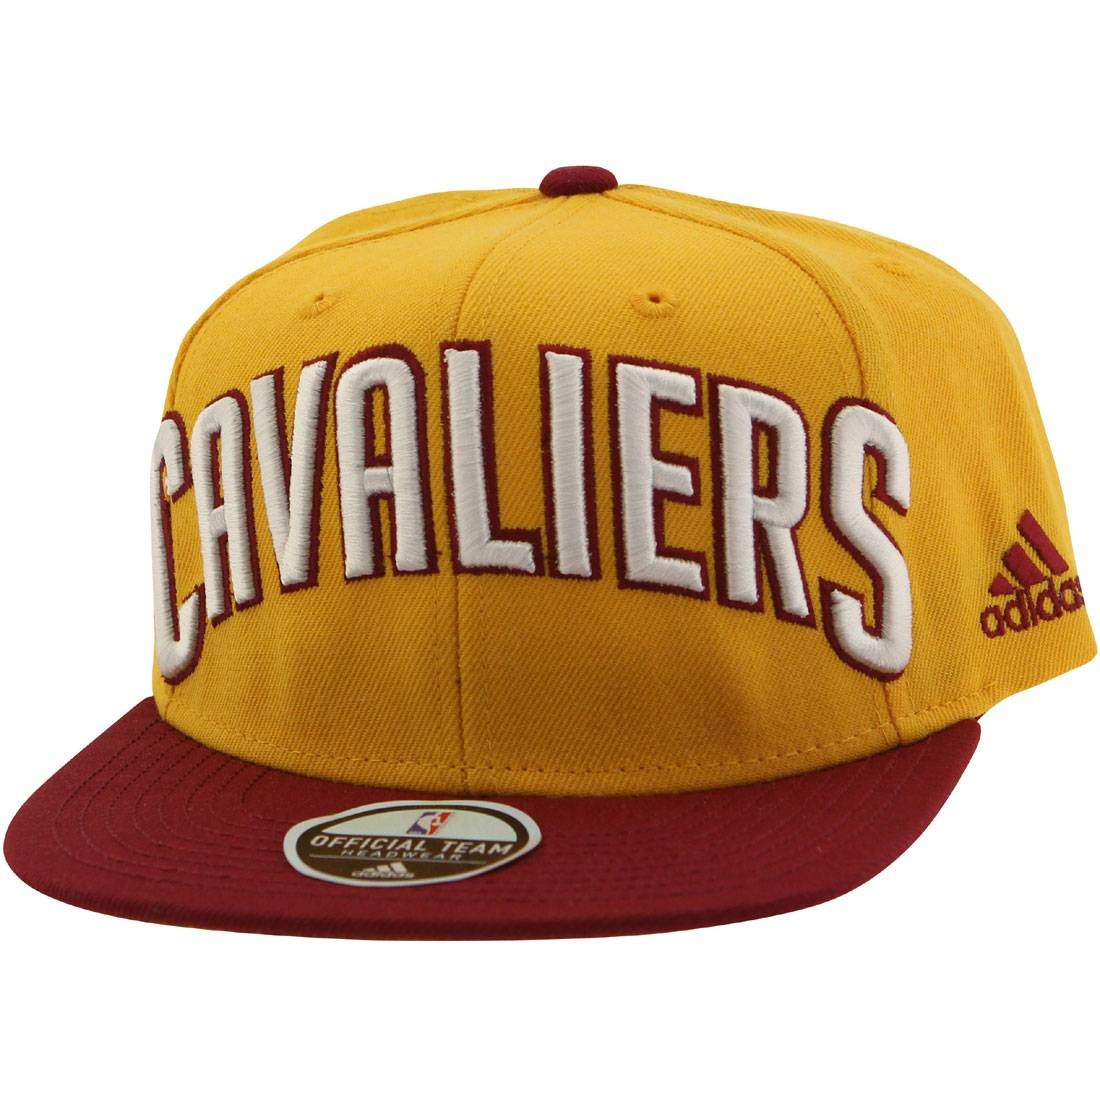 ego costo perspectiva Adidas NBA Cleveland Cavaliers On Court Snapback Cap gold maroon